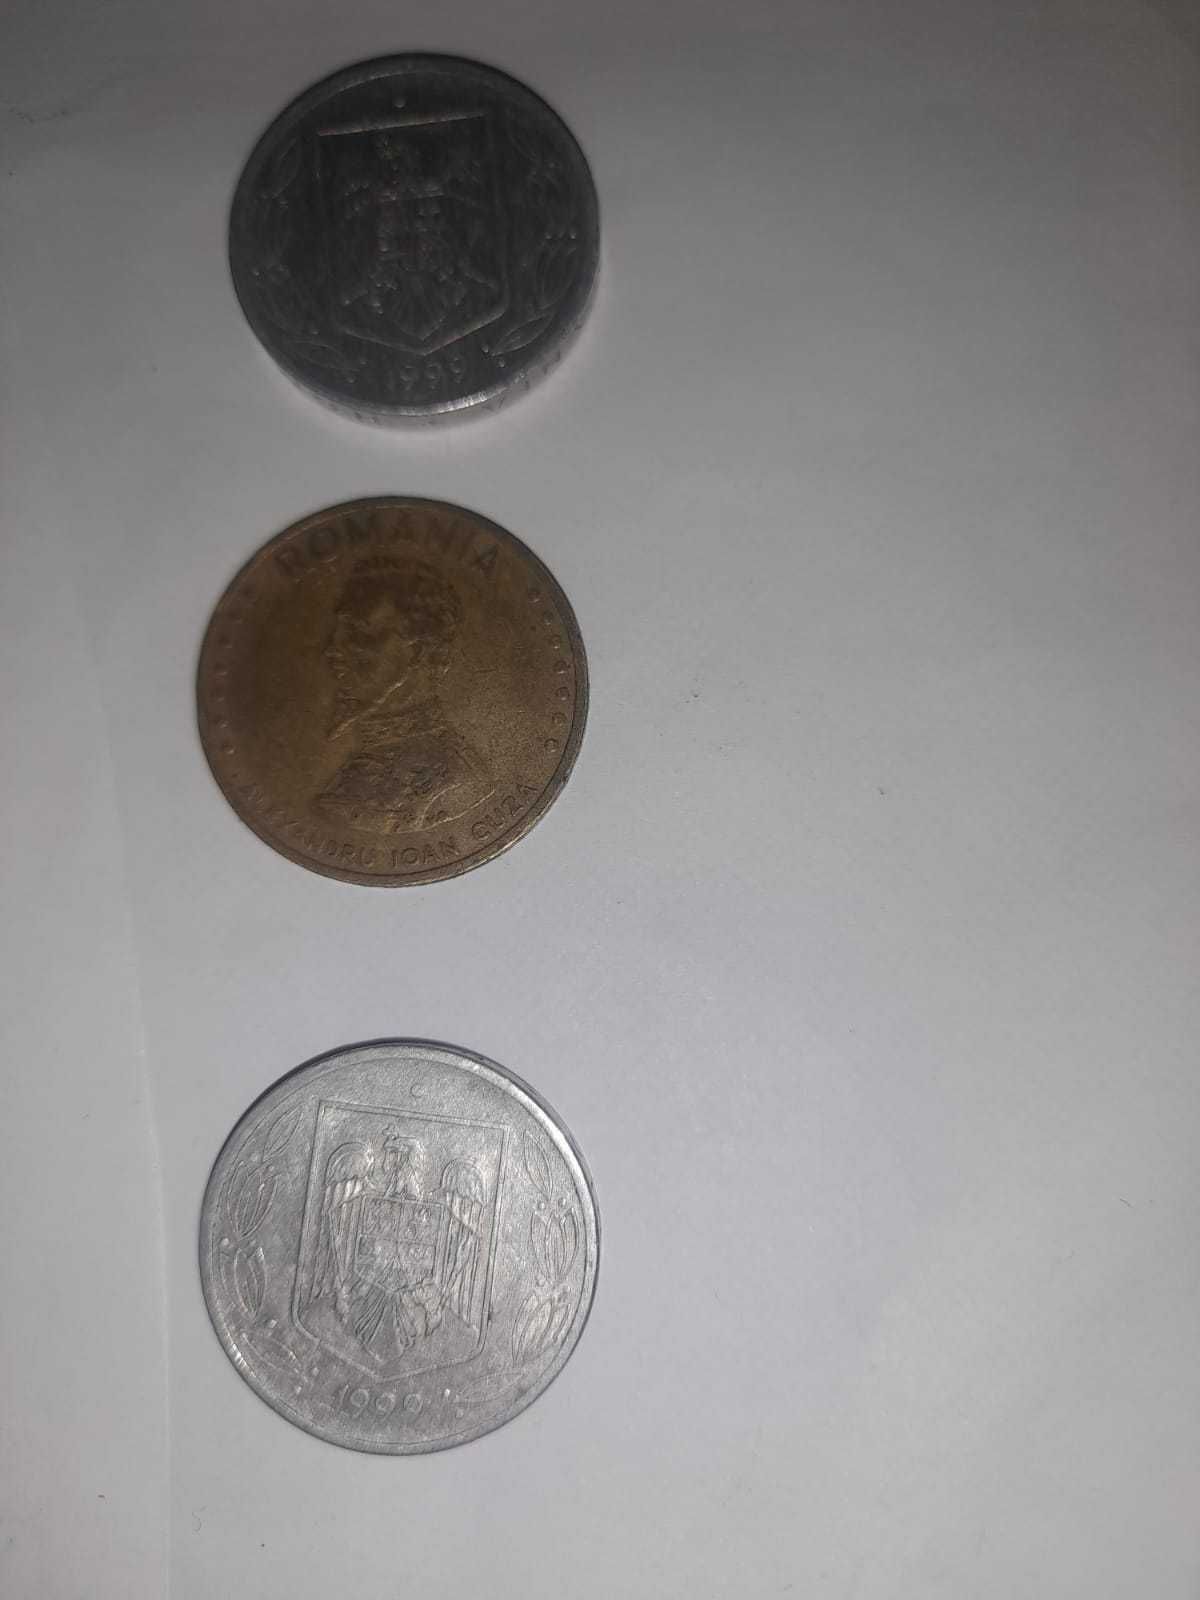 Titlul:Monede vechi din anul:1993 si 1999